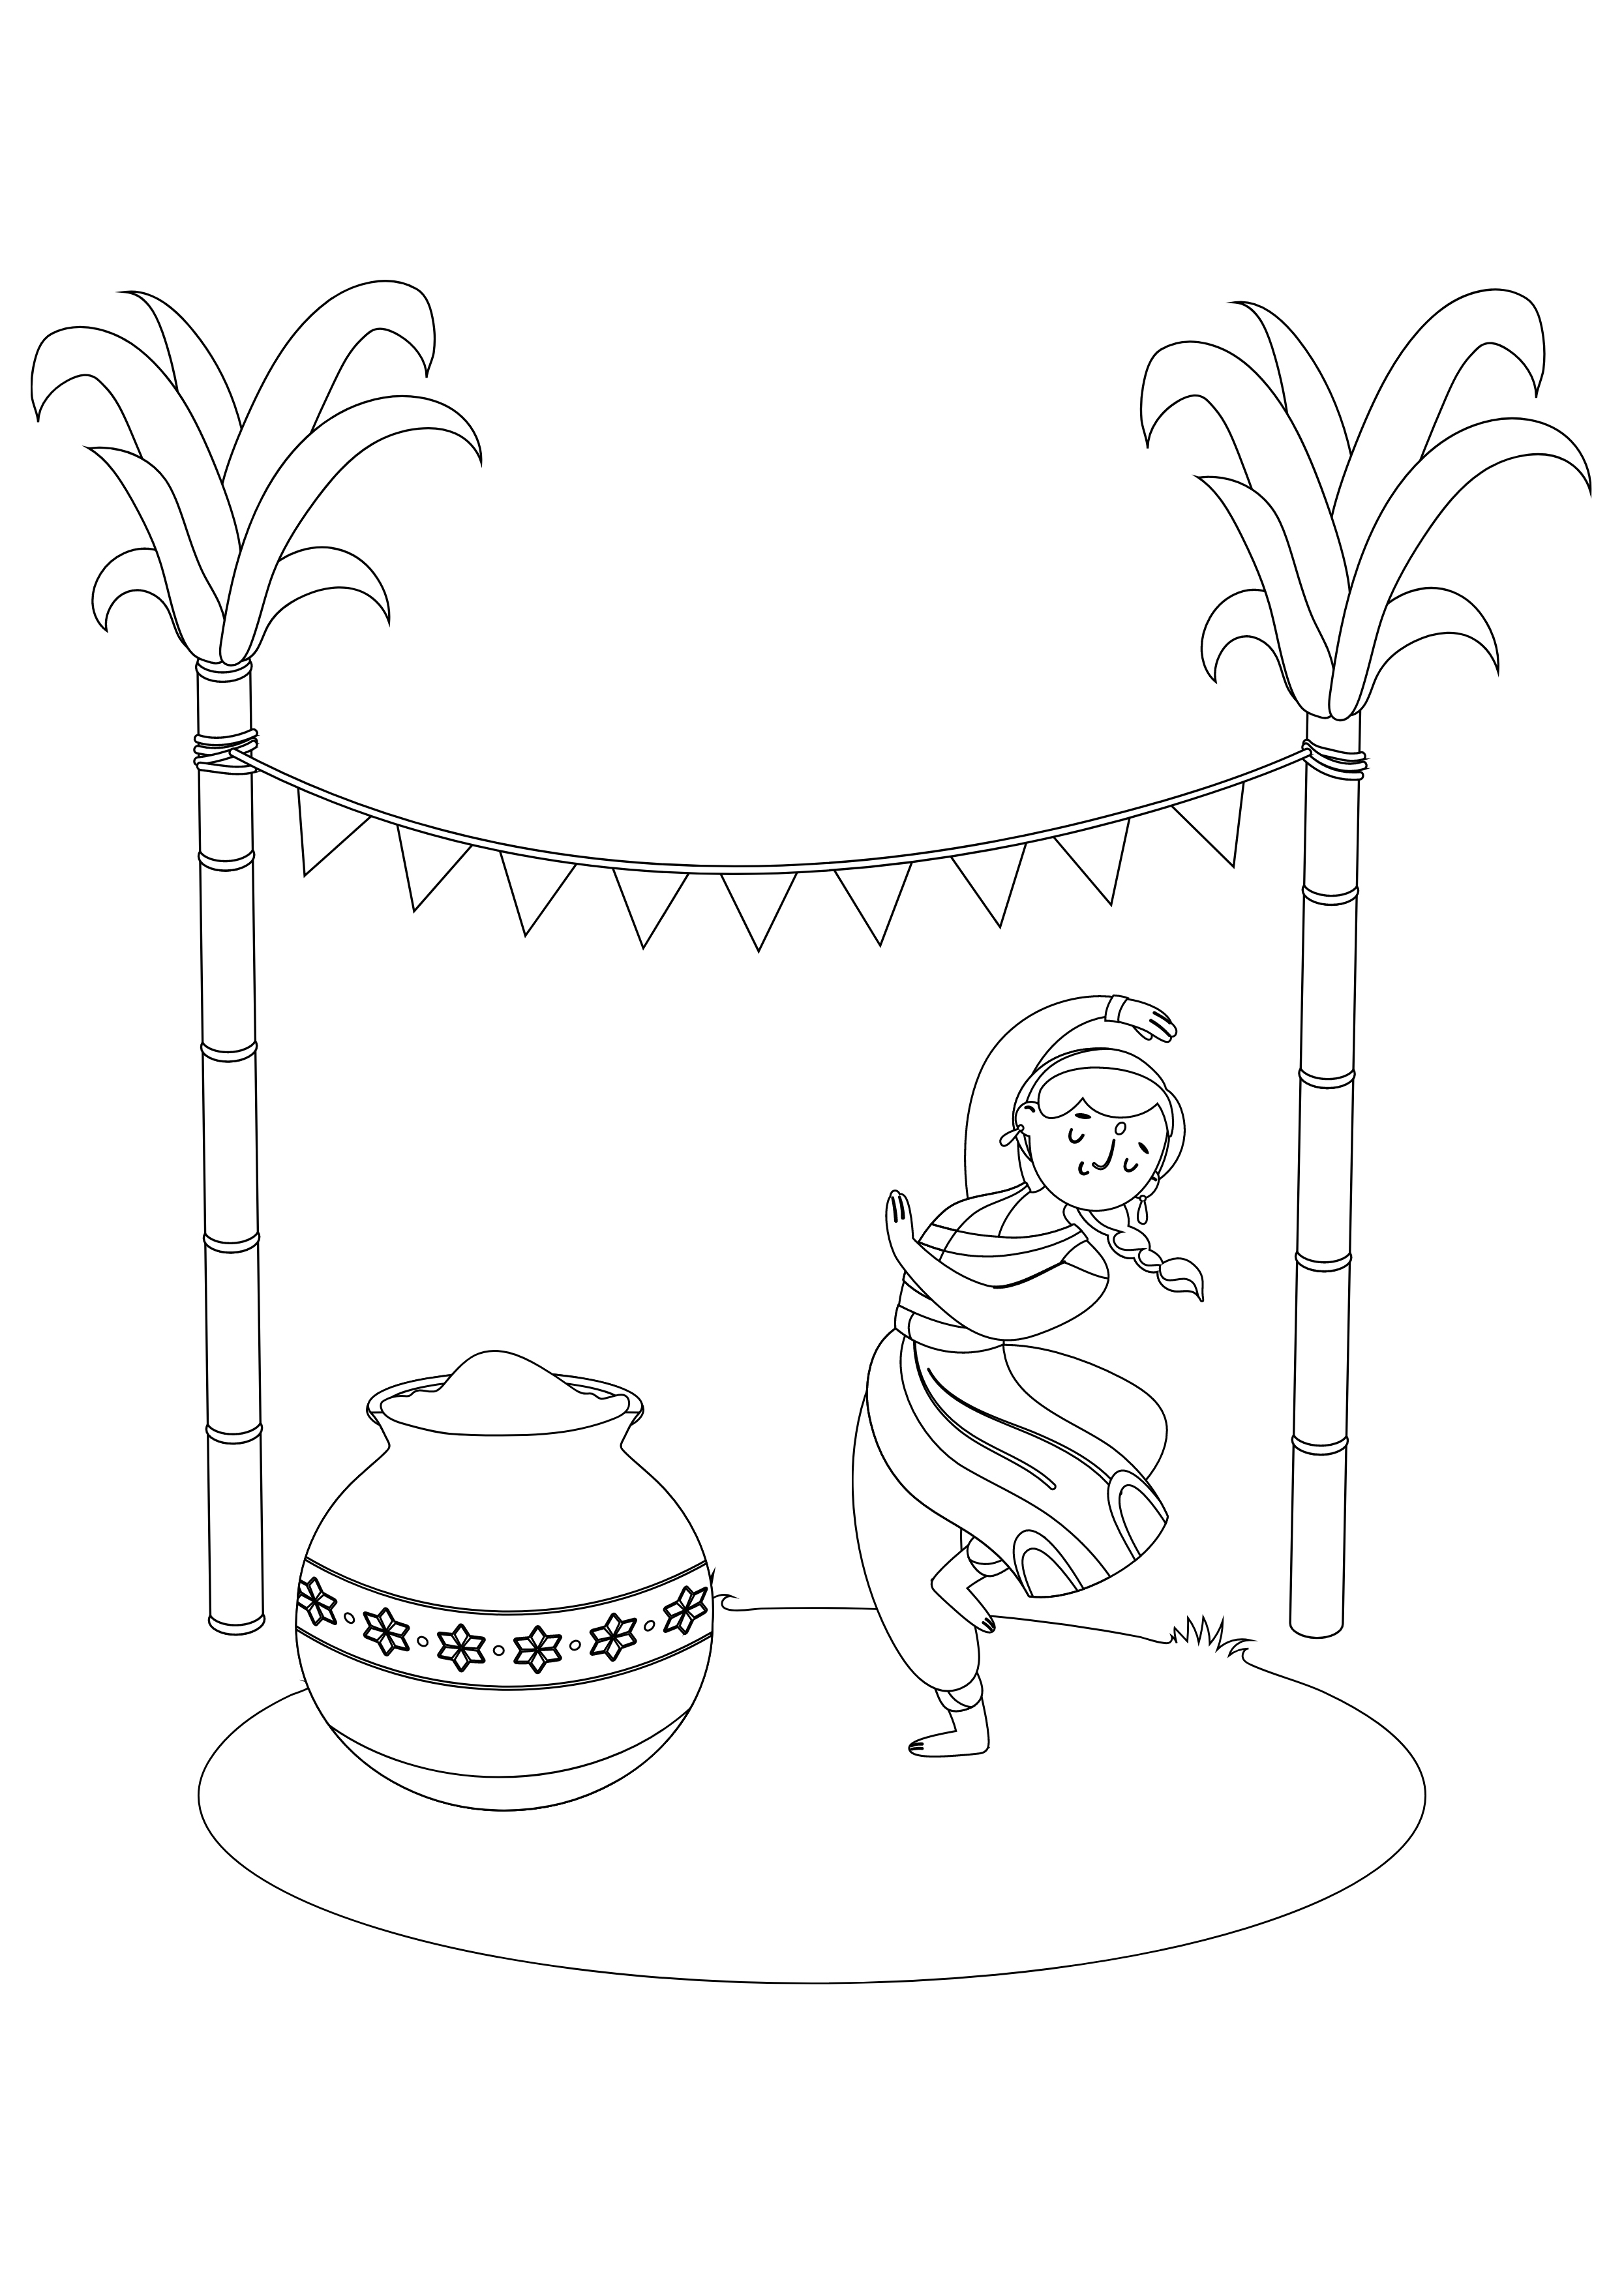 Pongal Festival drawing easy | Makar Sankranti festival drawing | How to draw  pongal picture | Easy drawings, Doodle drawings, Art lessons elementary